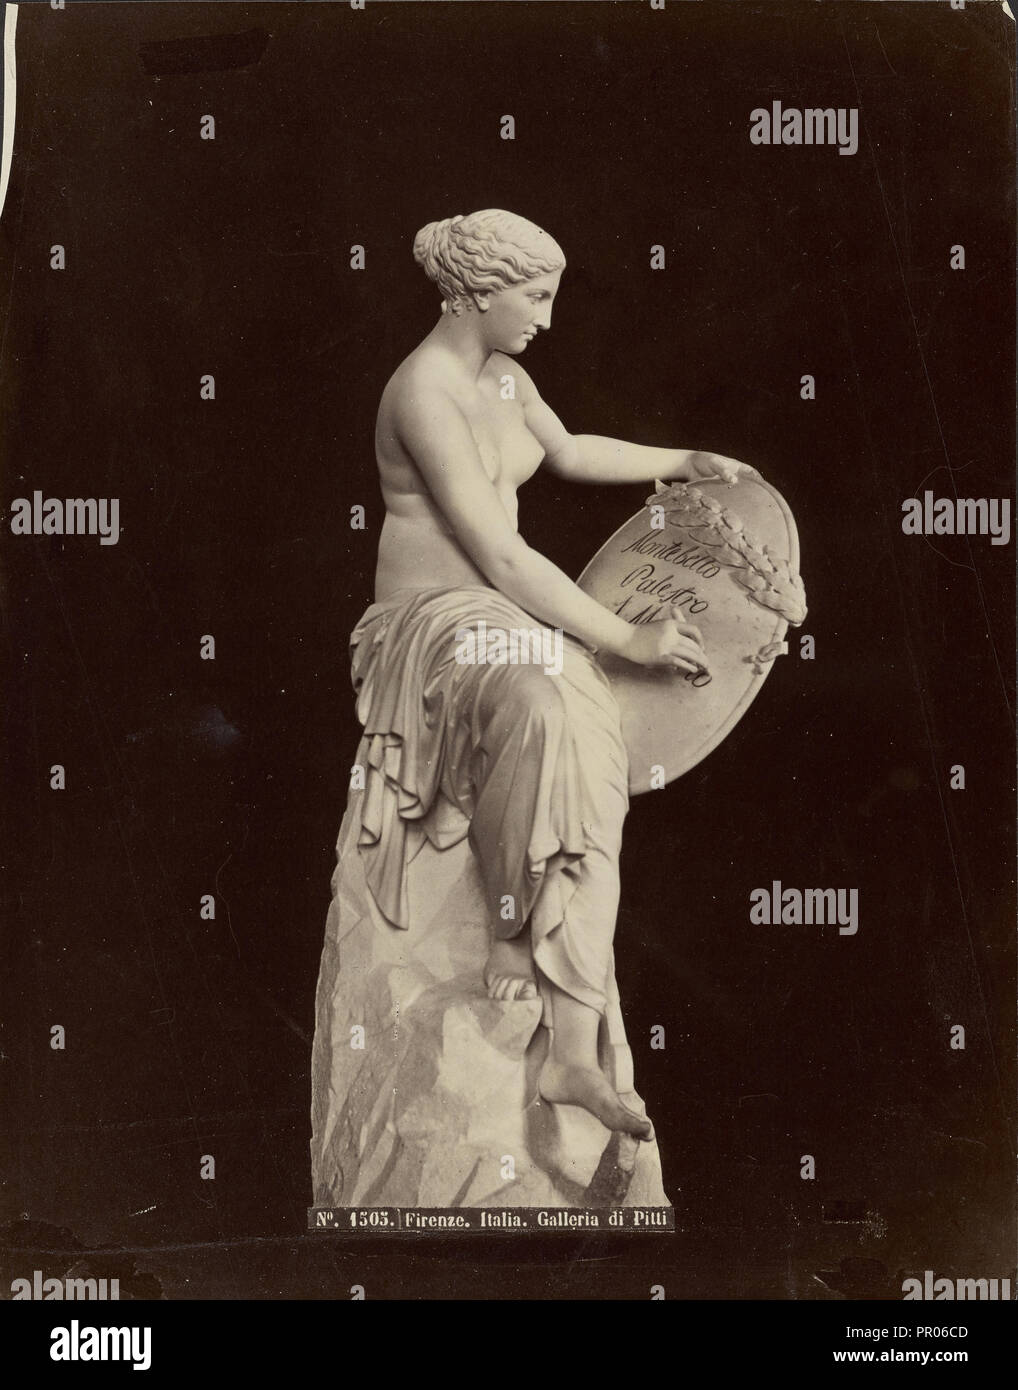 Firenze, Italia, Galleria di Pitti; Florence, Italy; about 1870 - 1890; Albumen silver print Stock Photo